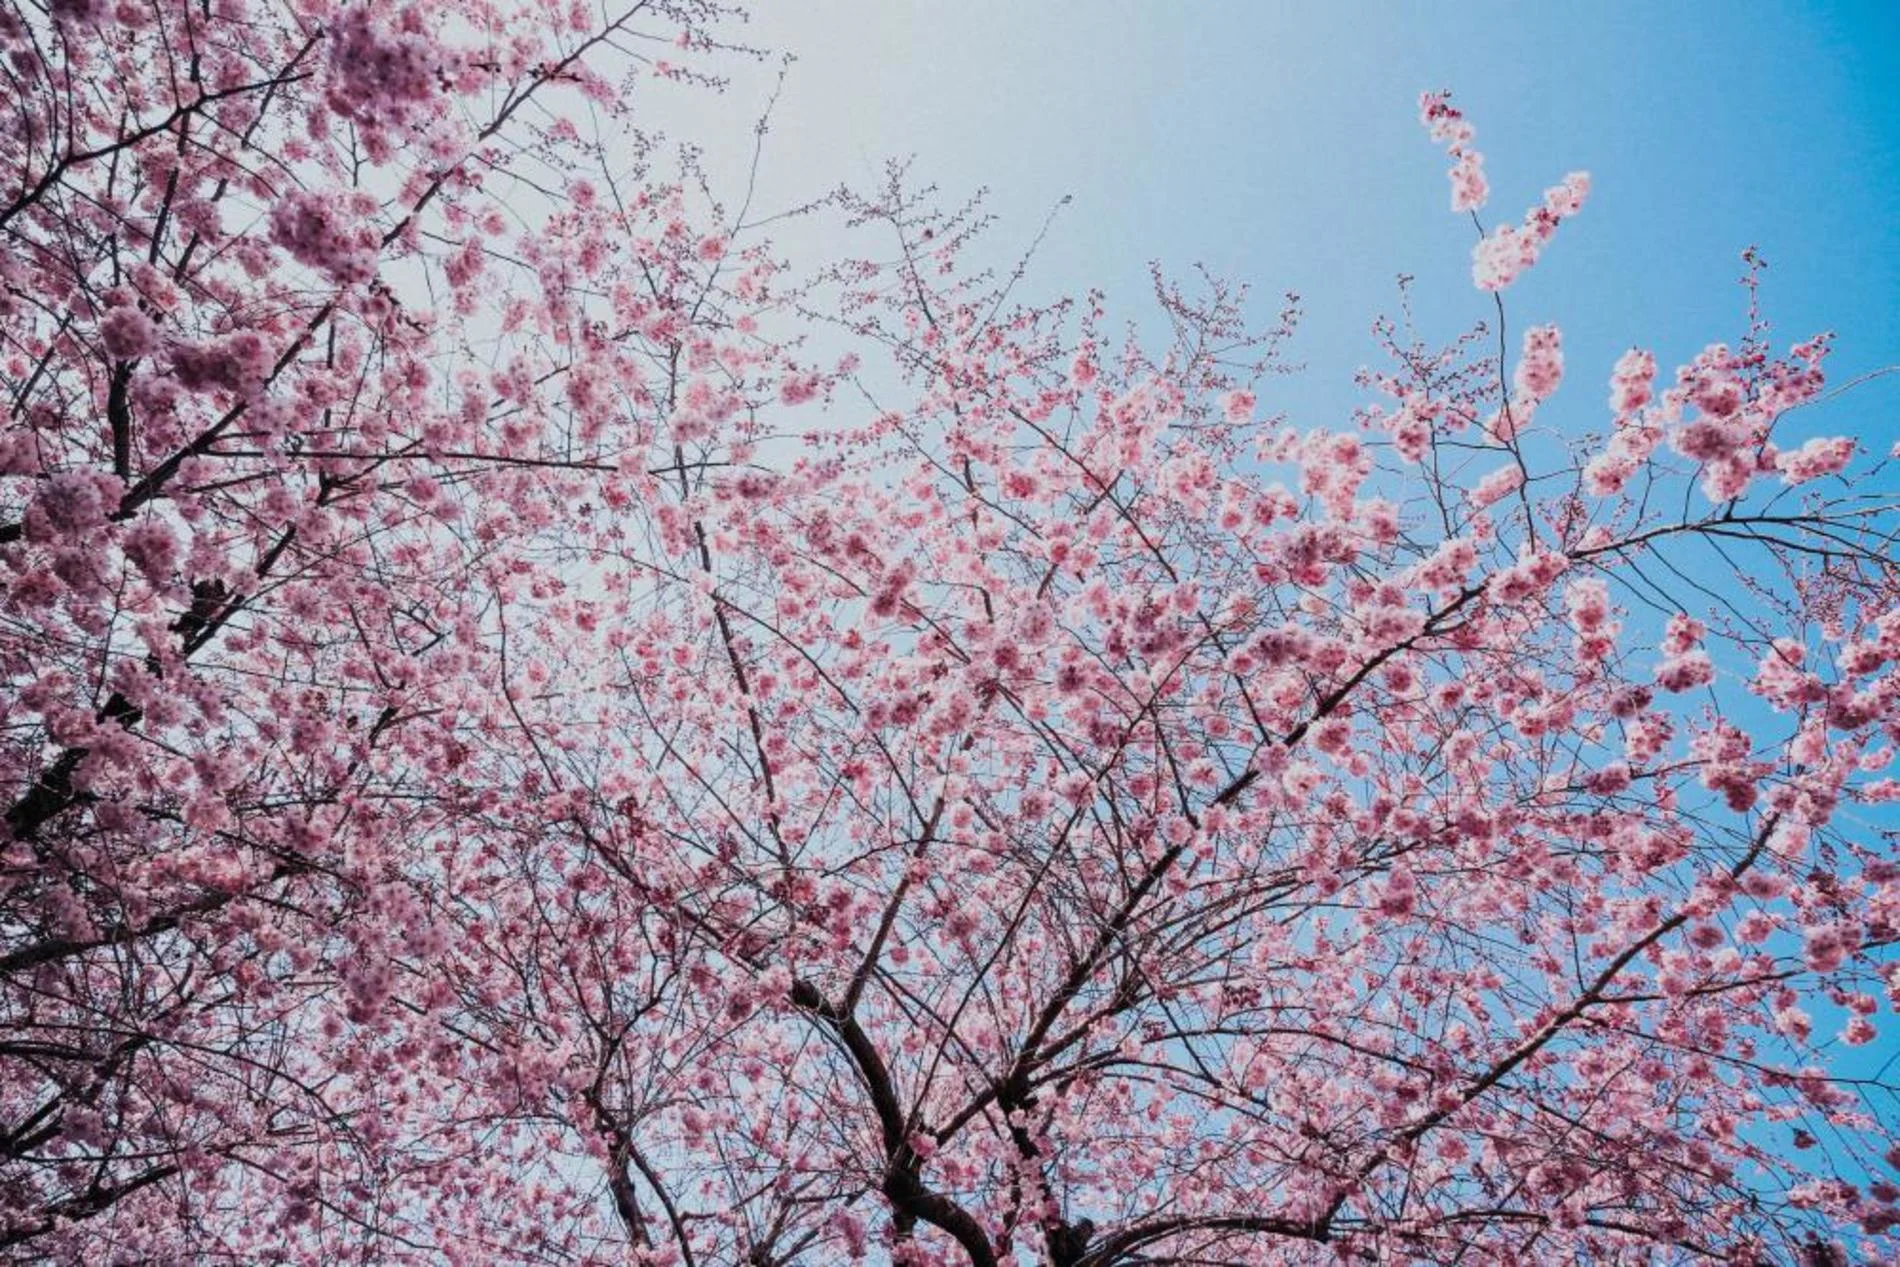 Toronto closes High Park during cherry blossom bloom